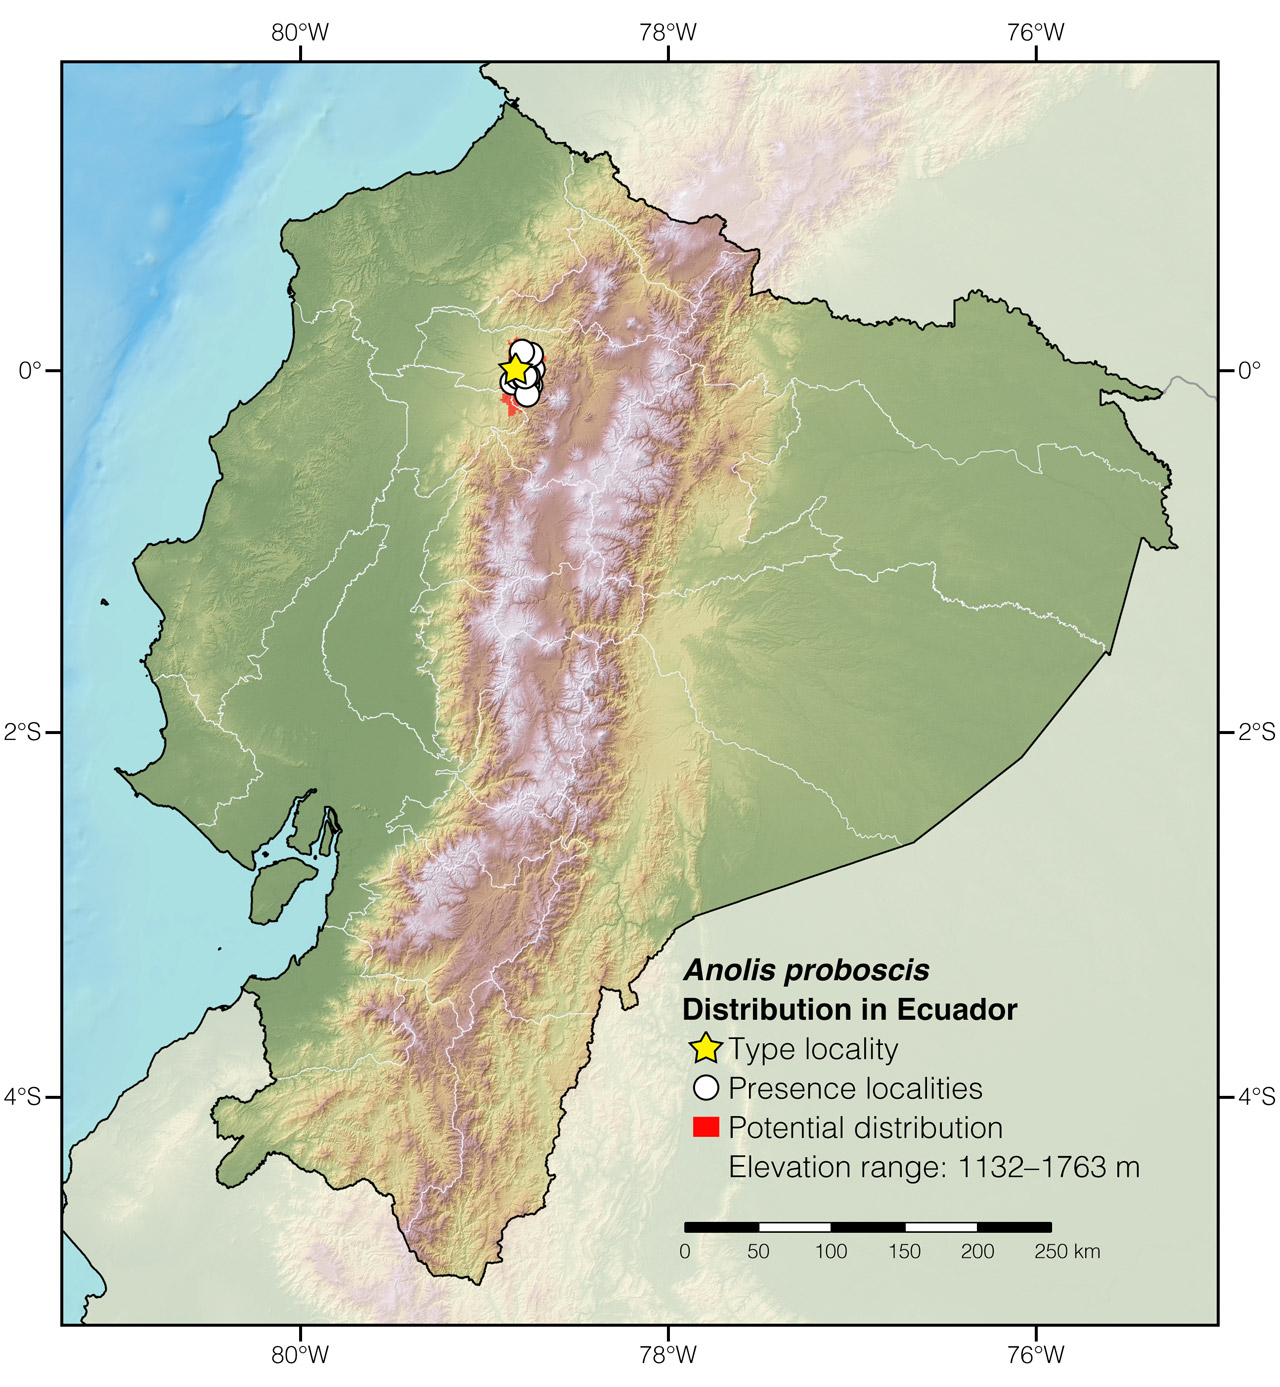 Distribution of Anolis proboscis in Ecuador